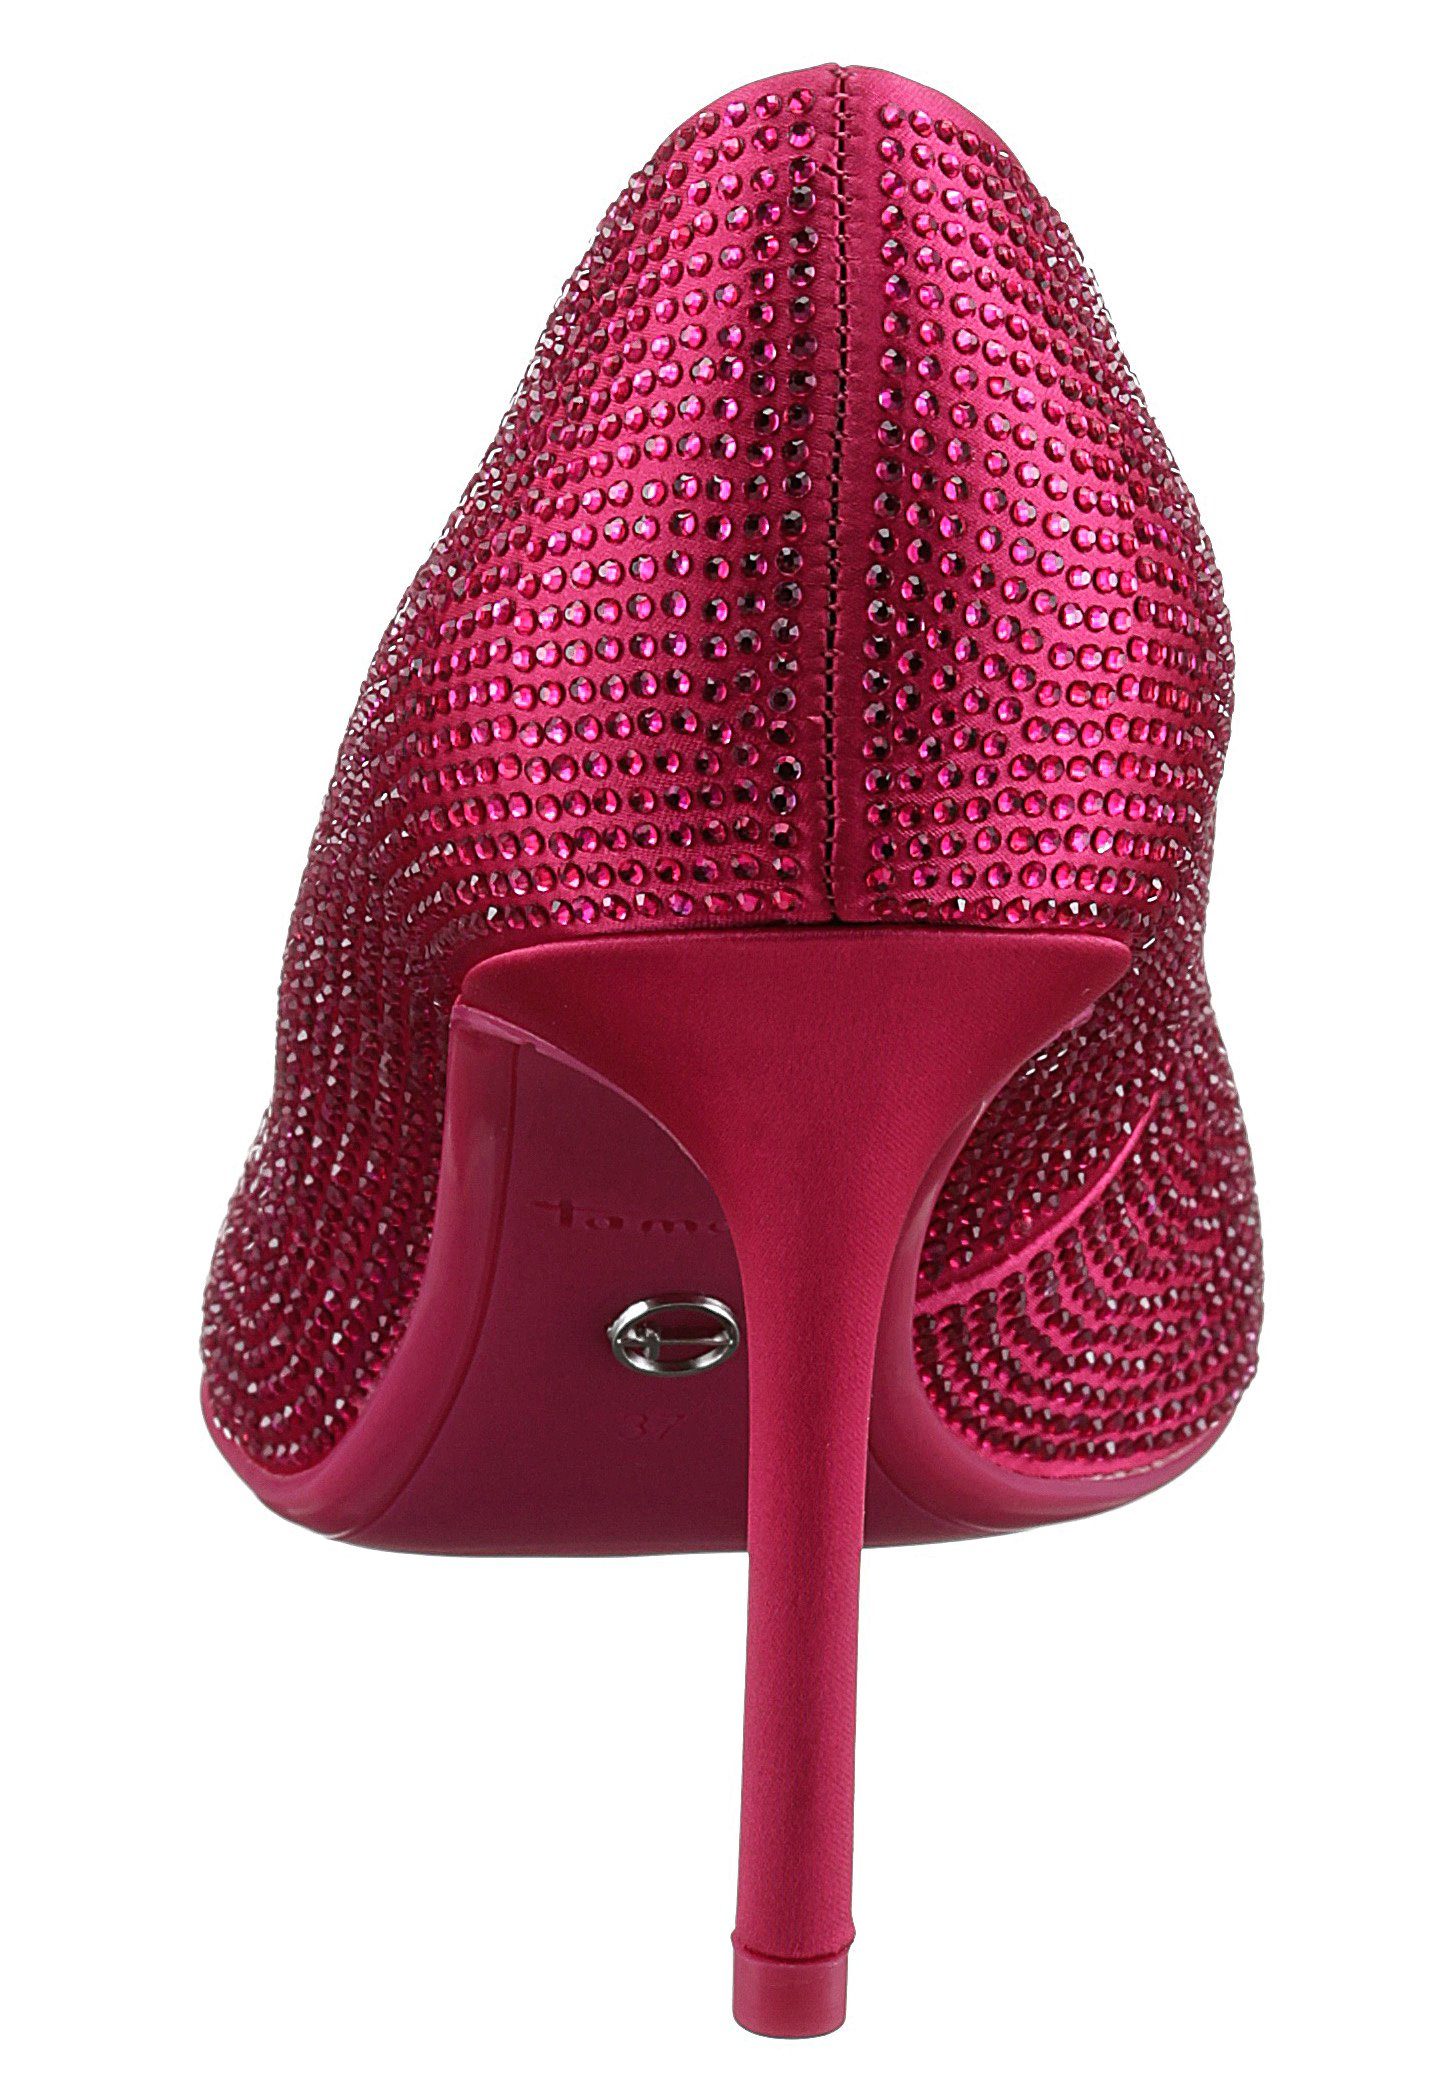 Tamaris High-Heel-Pumps in spitzer pink eleganter Form